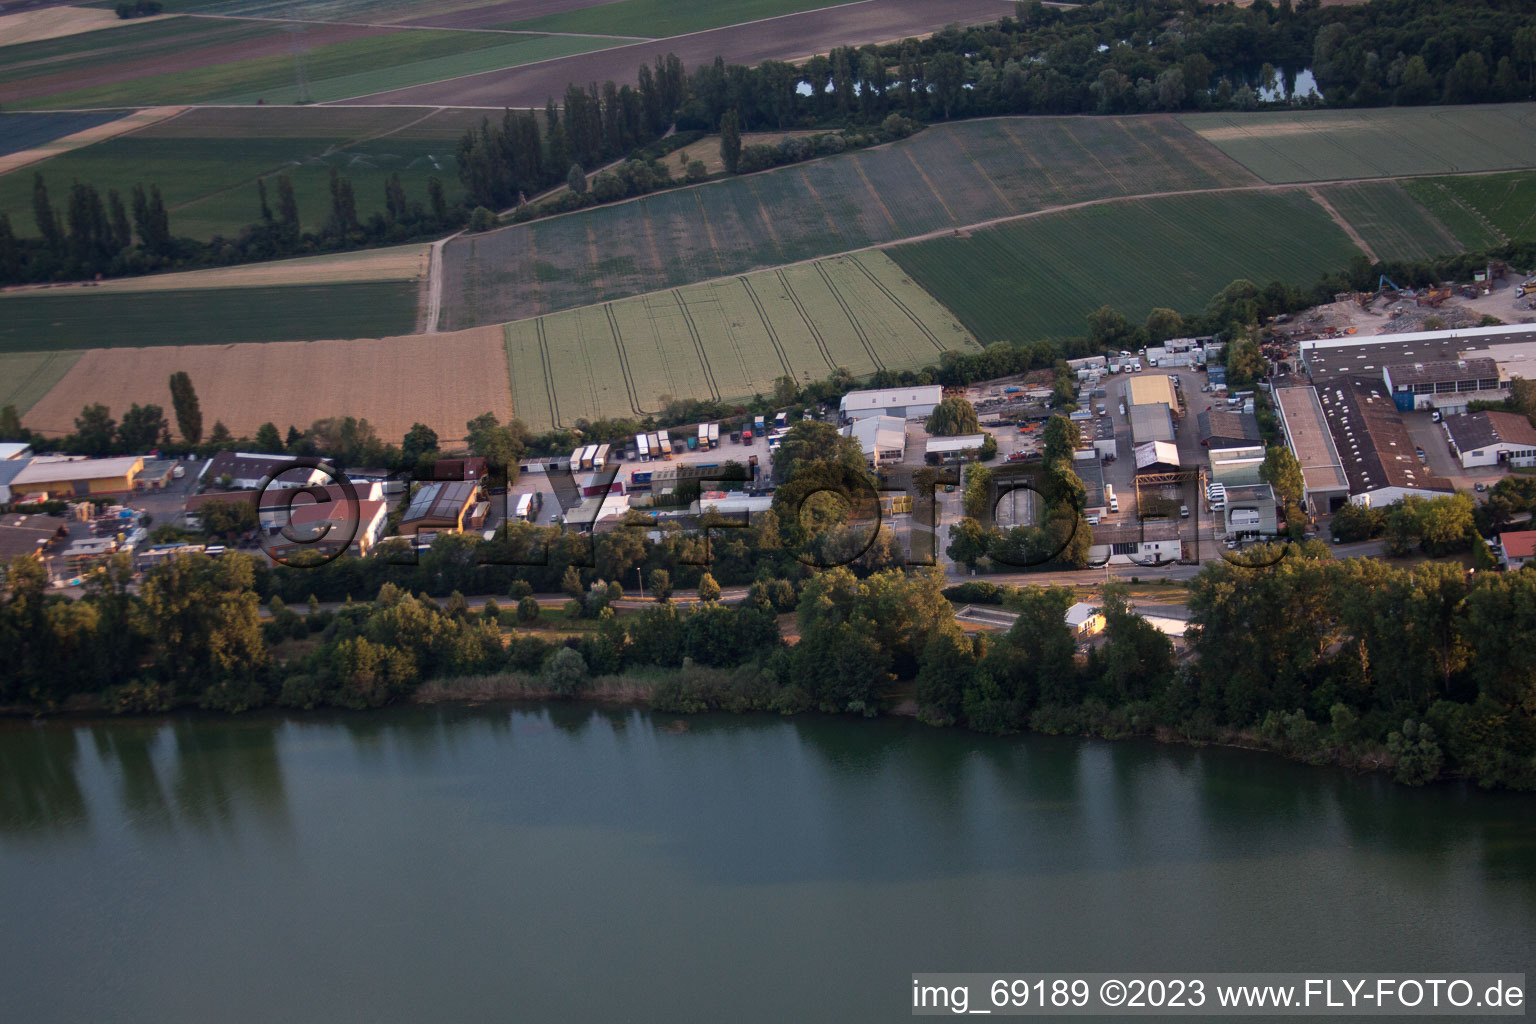 Aerial photograpy of Industriestr in the district Roxheim in Bobenheim-Roxheim in the state Rhineland-Palatinate, Germany